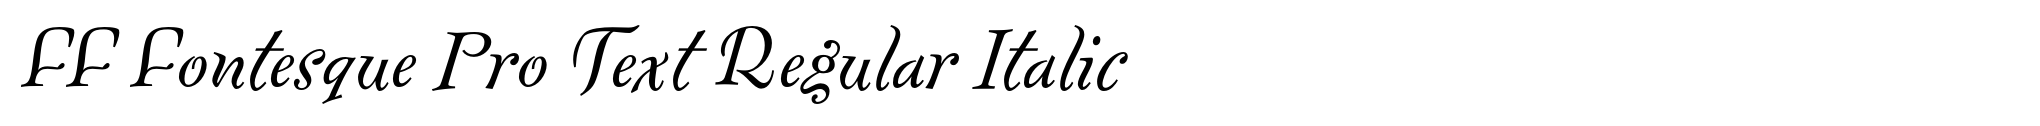 FF Fontesque Pro Text Regular Italic image